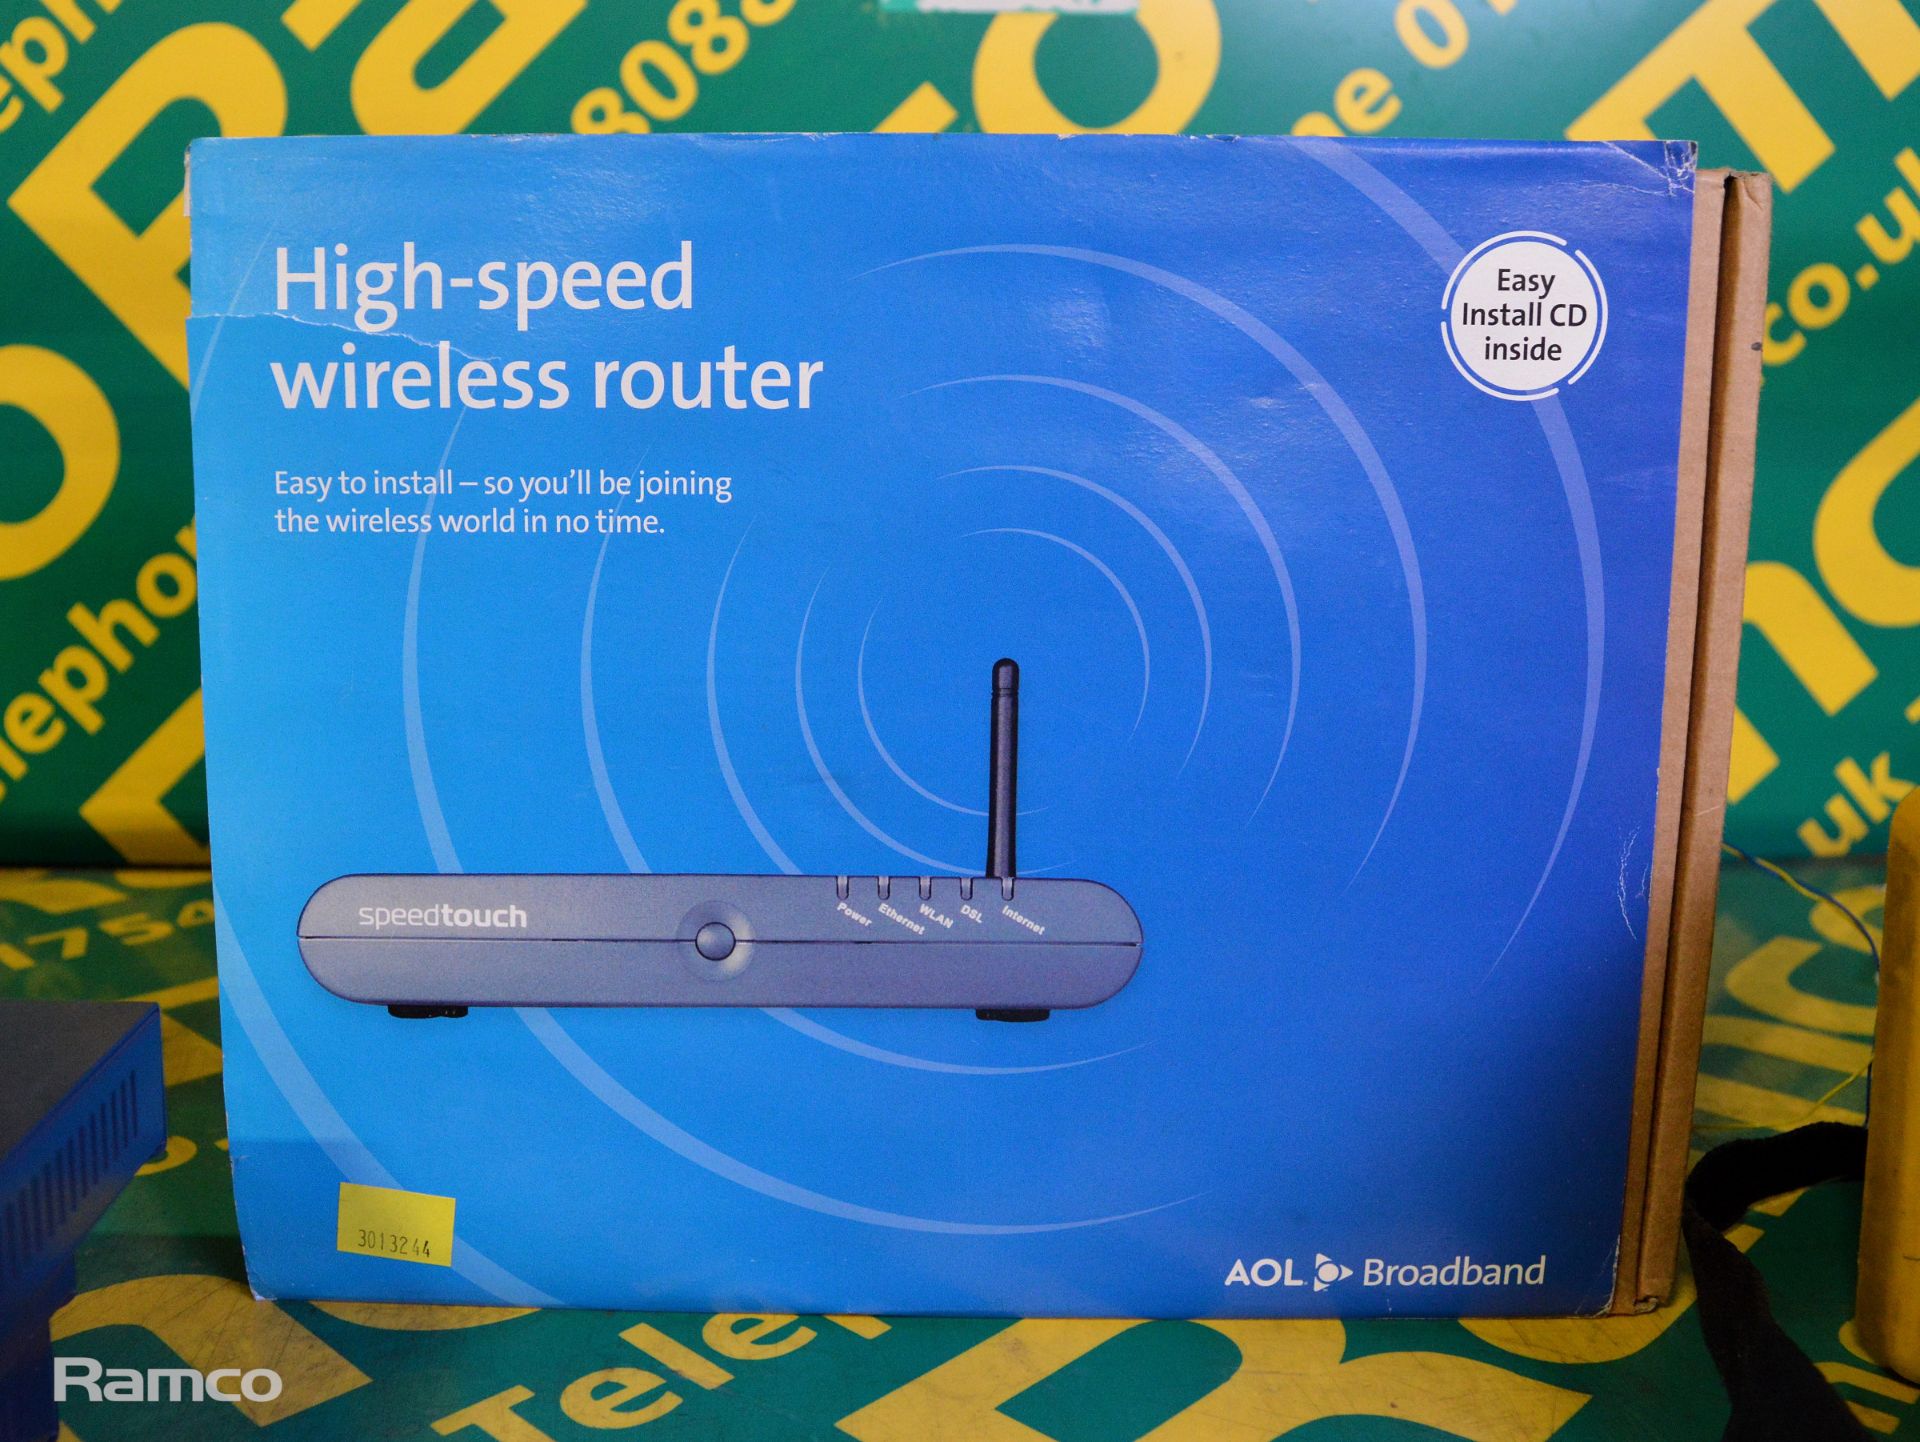 3x Netgear FS116 Prosafe 16 Port 10/100 Switch, AOL Broadband 037324 High Speed Wireless Router - Image 3 of 6